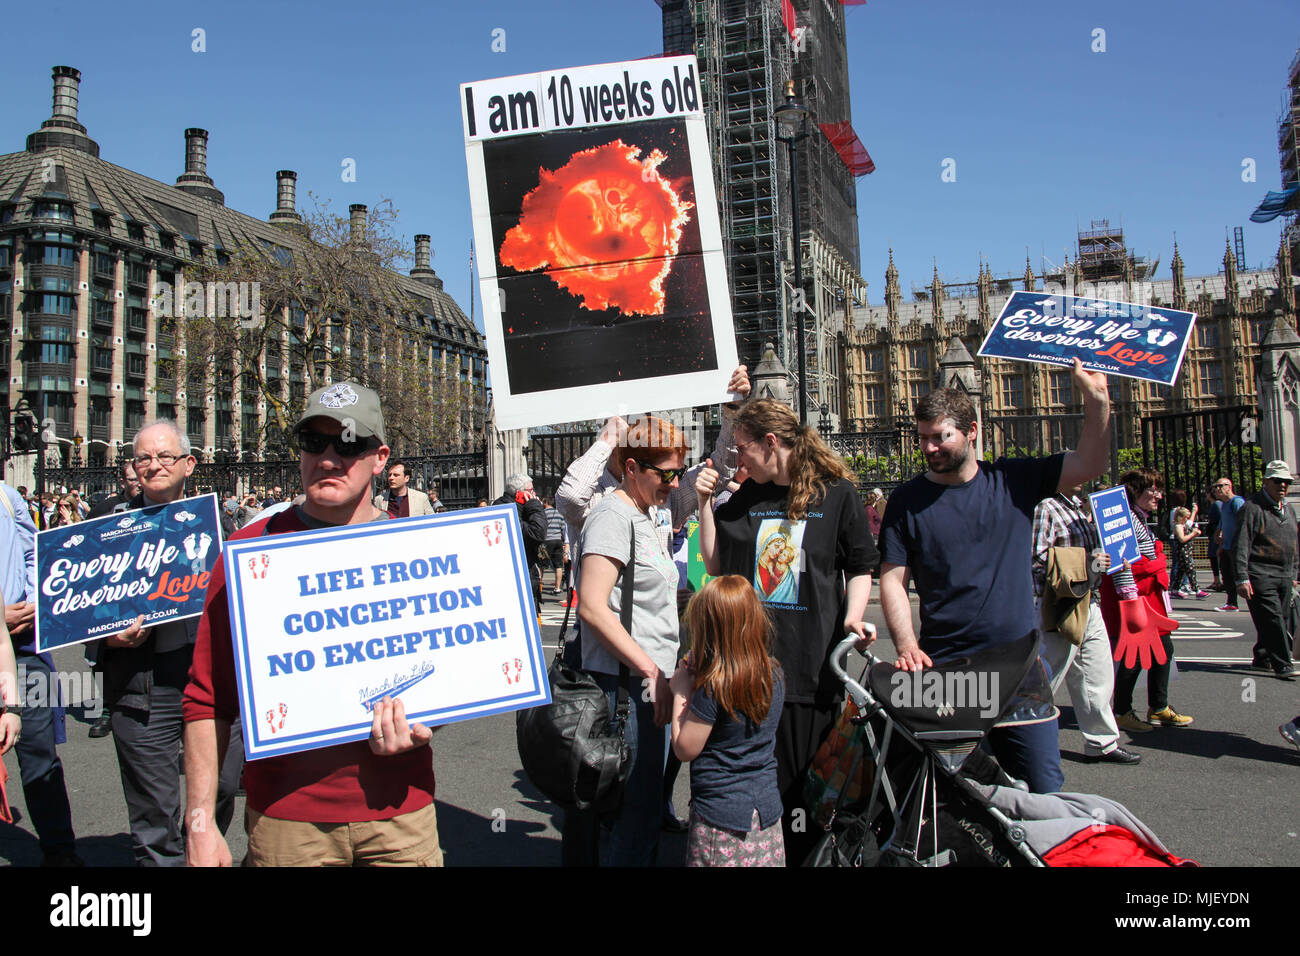 London, UK. 5th May, 2018. Pro-life demonstrators march through London Credit: Alex Cavendish/Alamy Live News Stock Photo